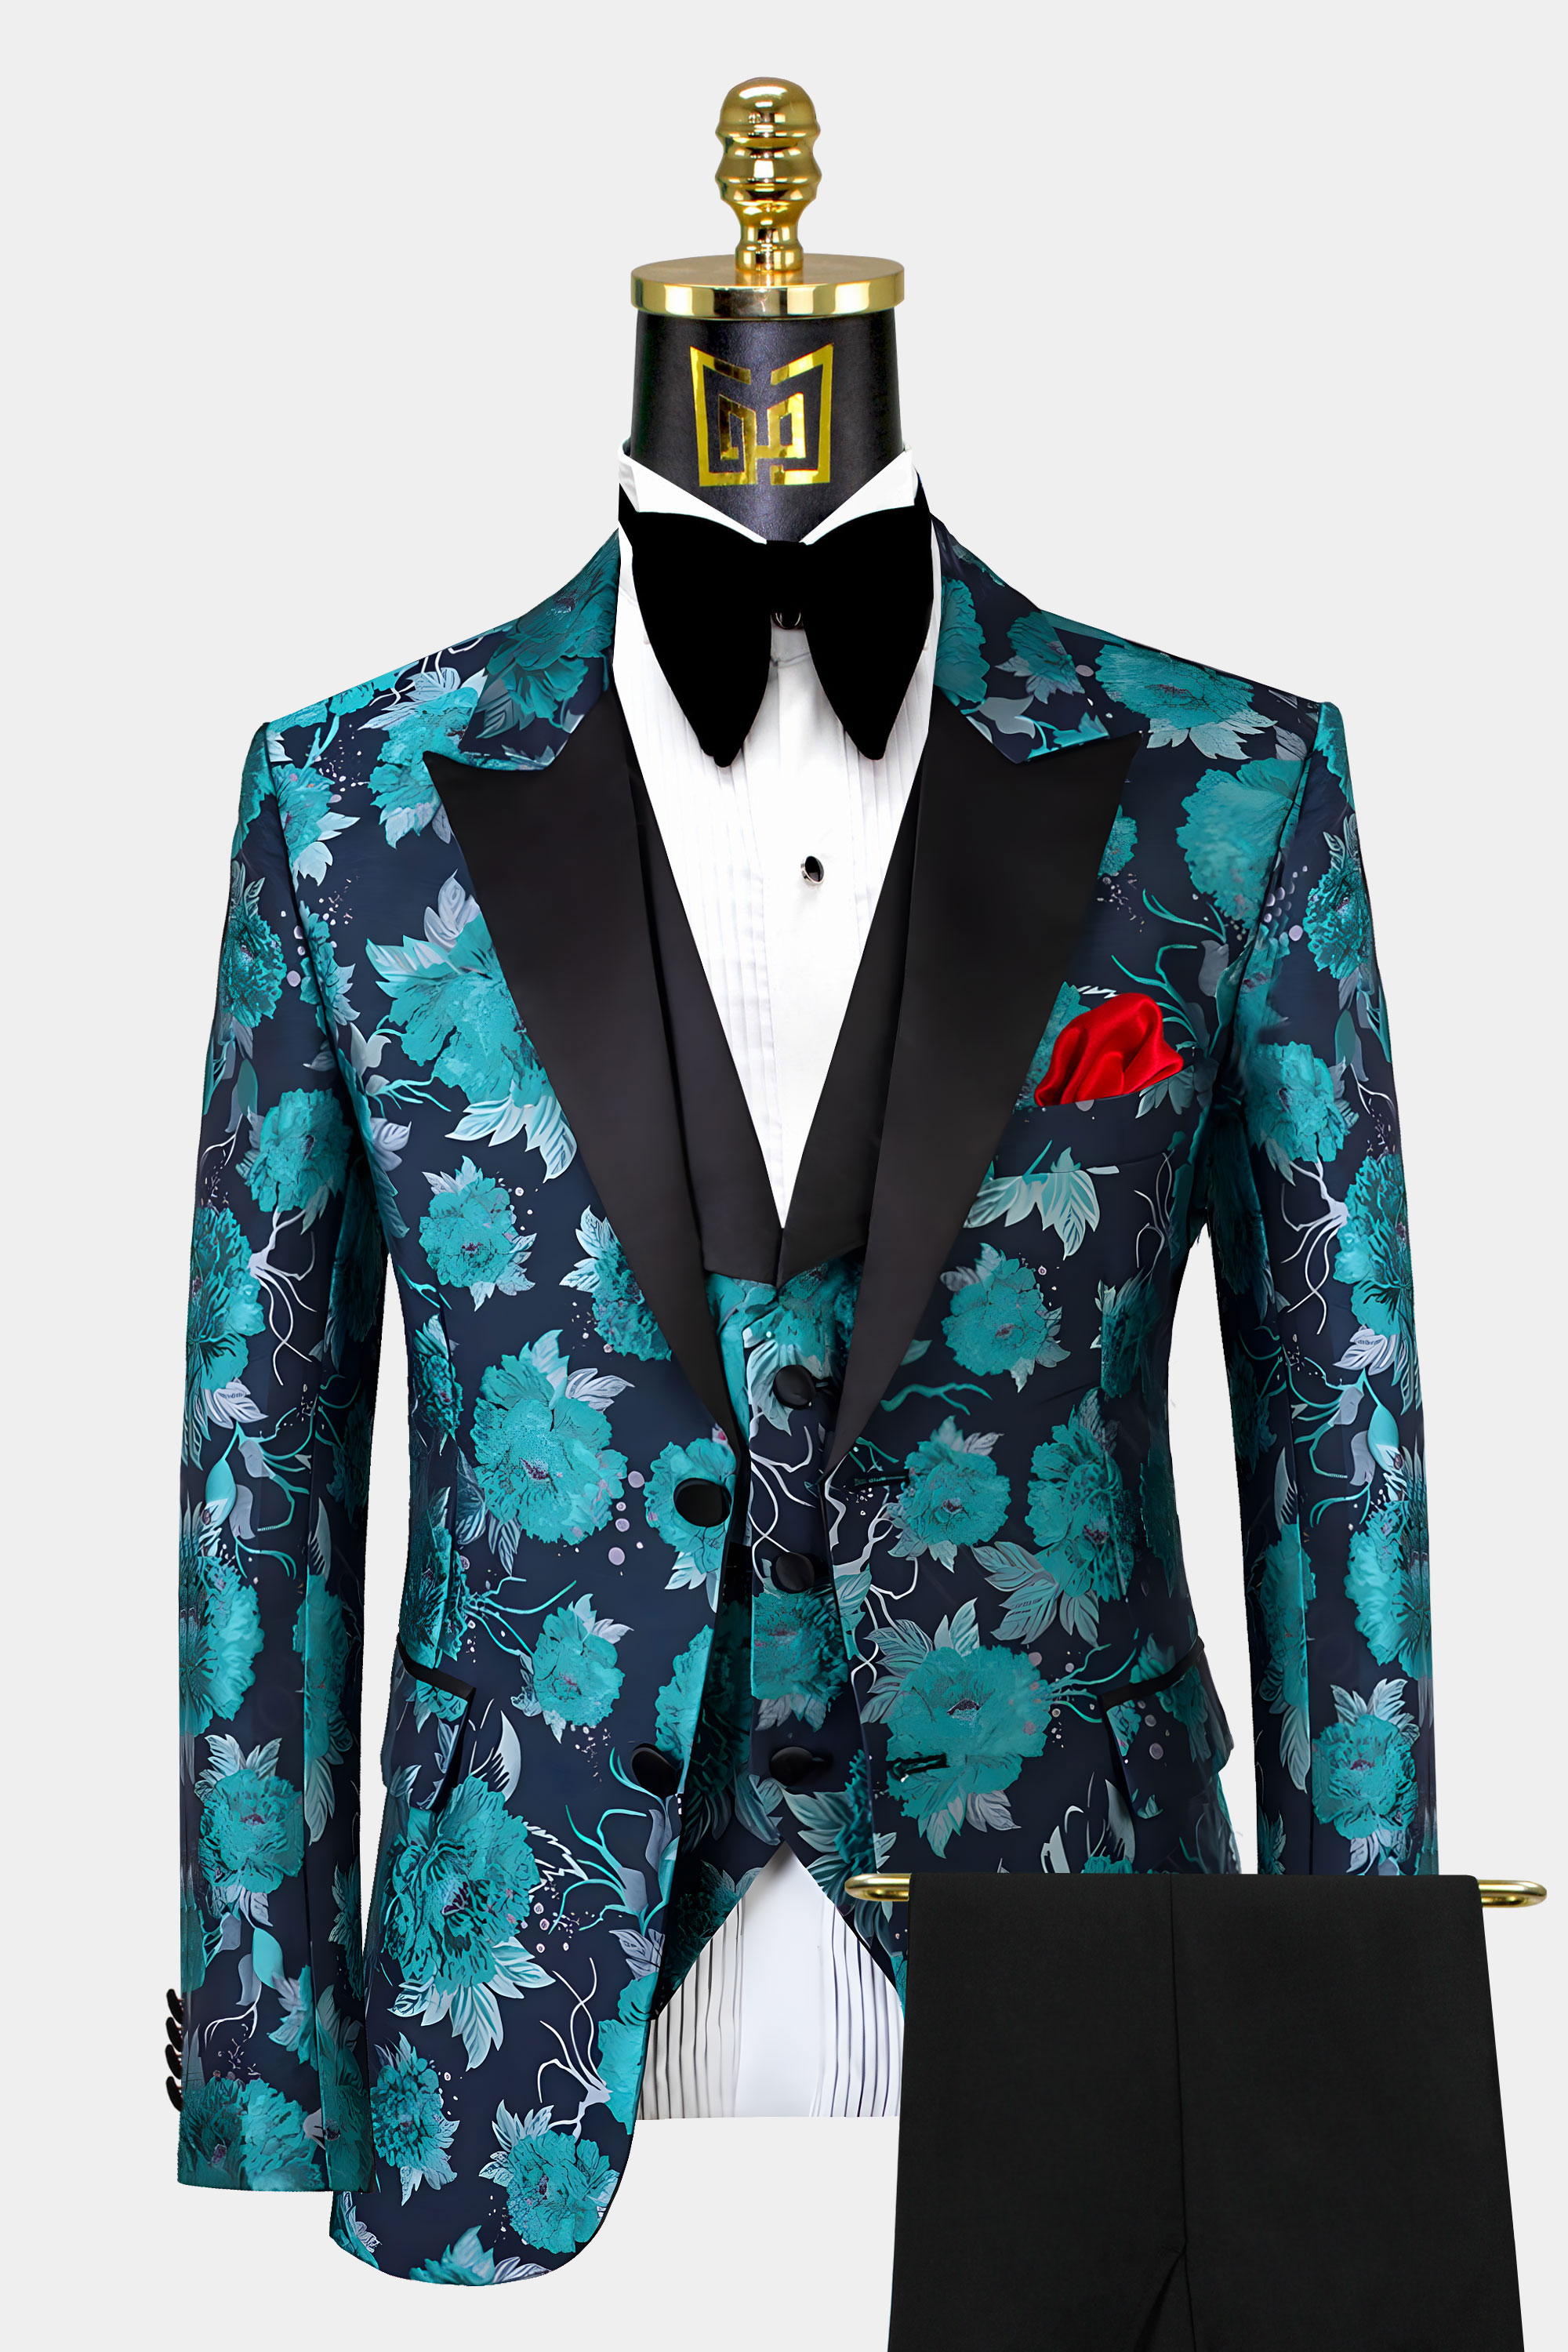 Mens Black And Turquoise Tuxedo Wedding Groom Prom Suit From Gentlemansguru.com  